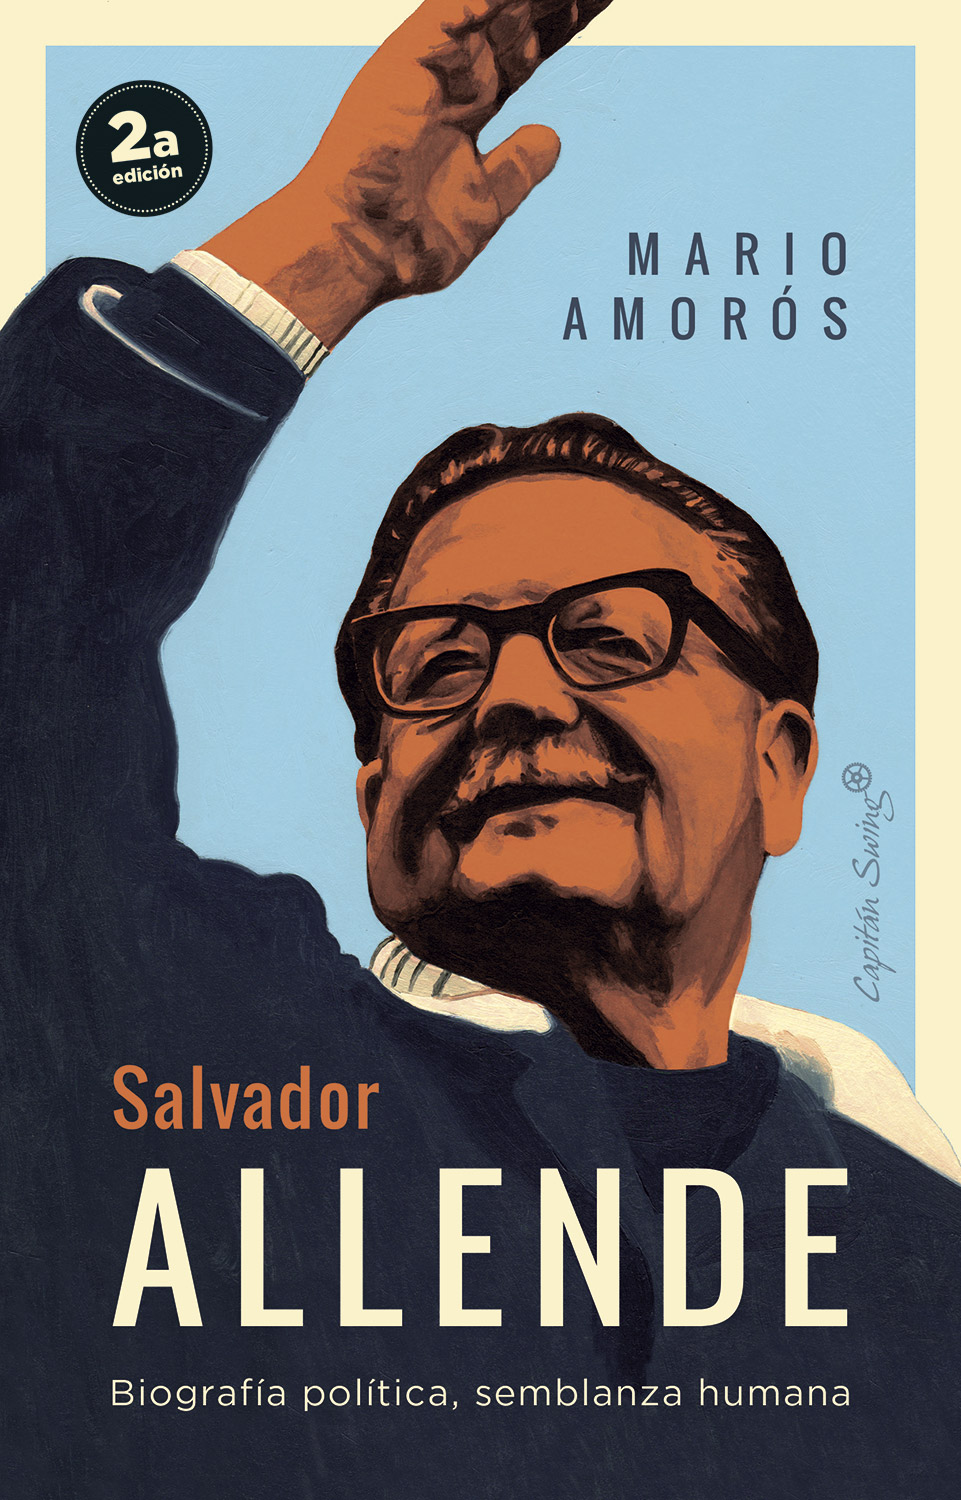 Mario-Amoros-Salvador-Allende-2edicion